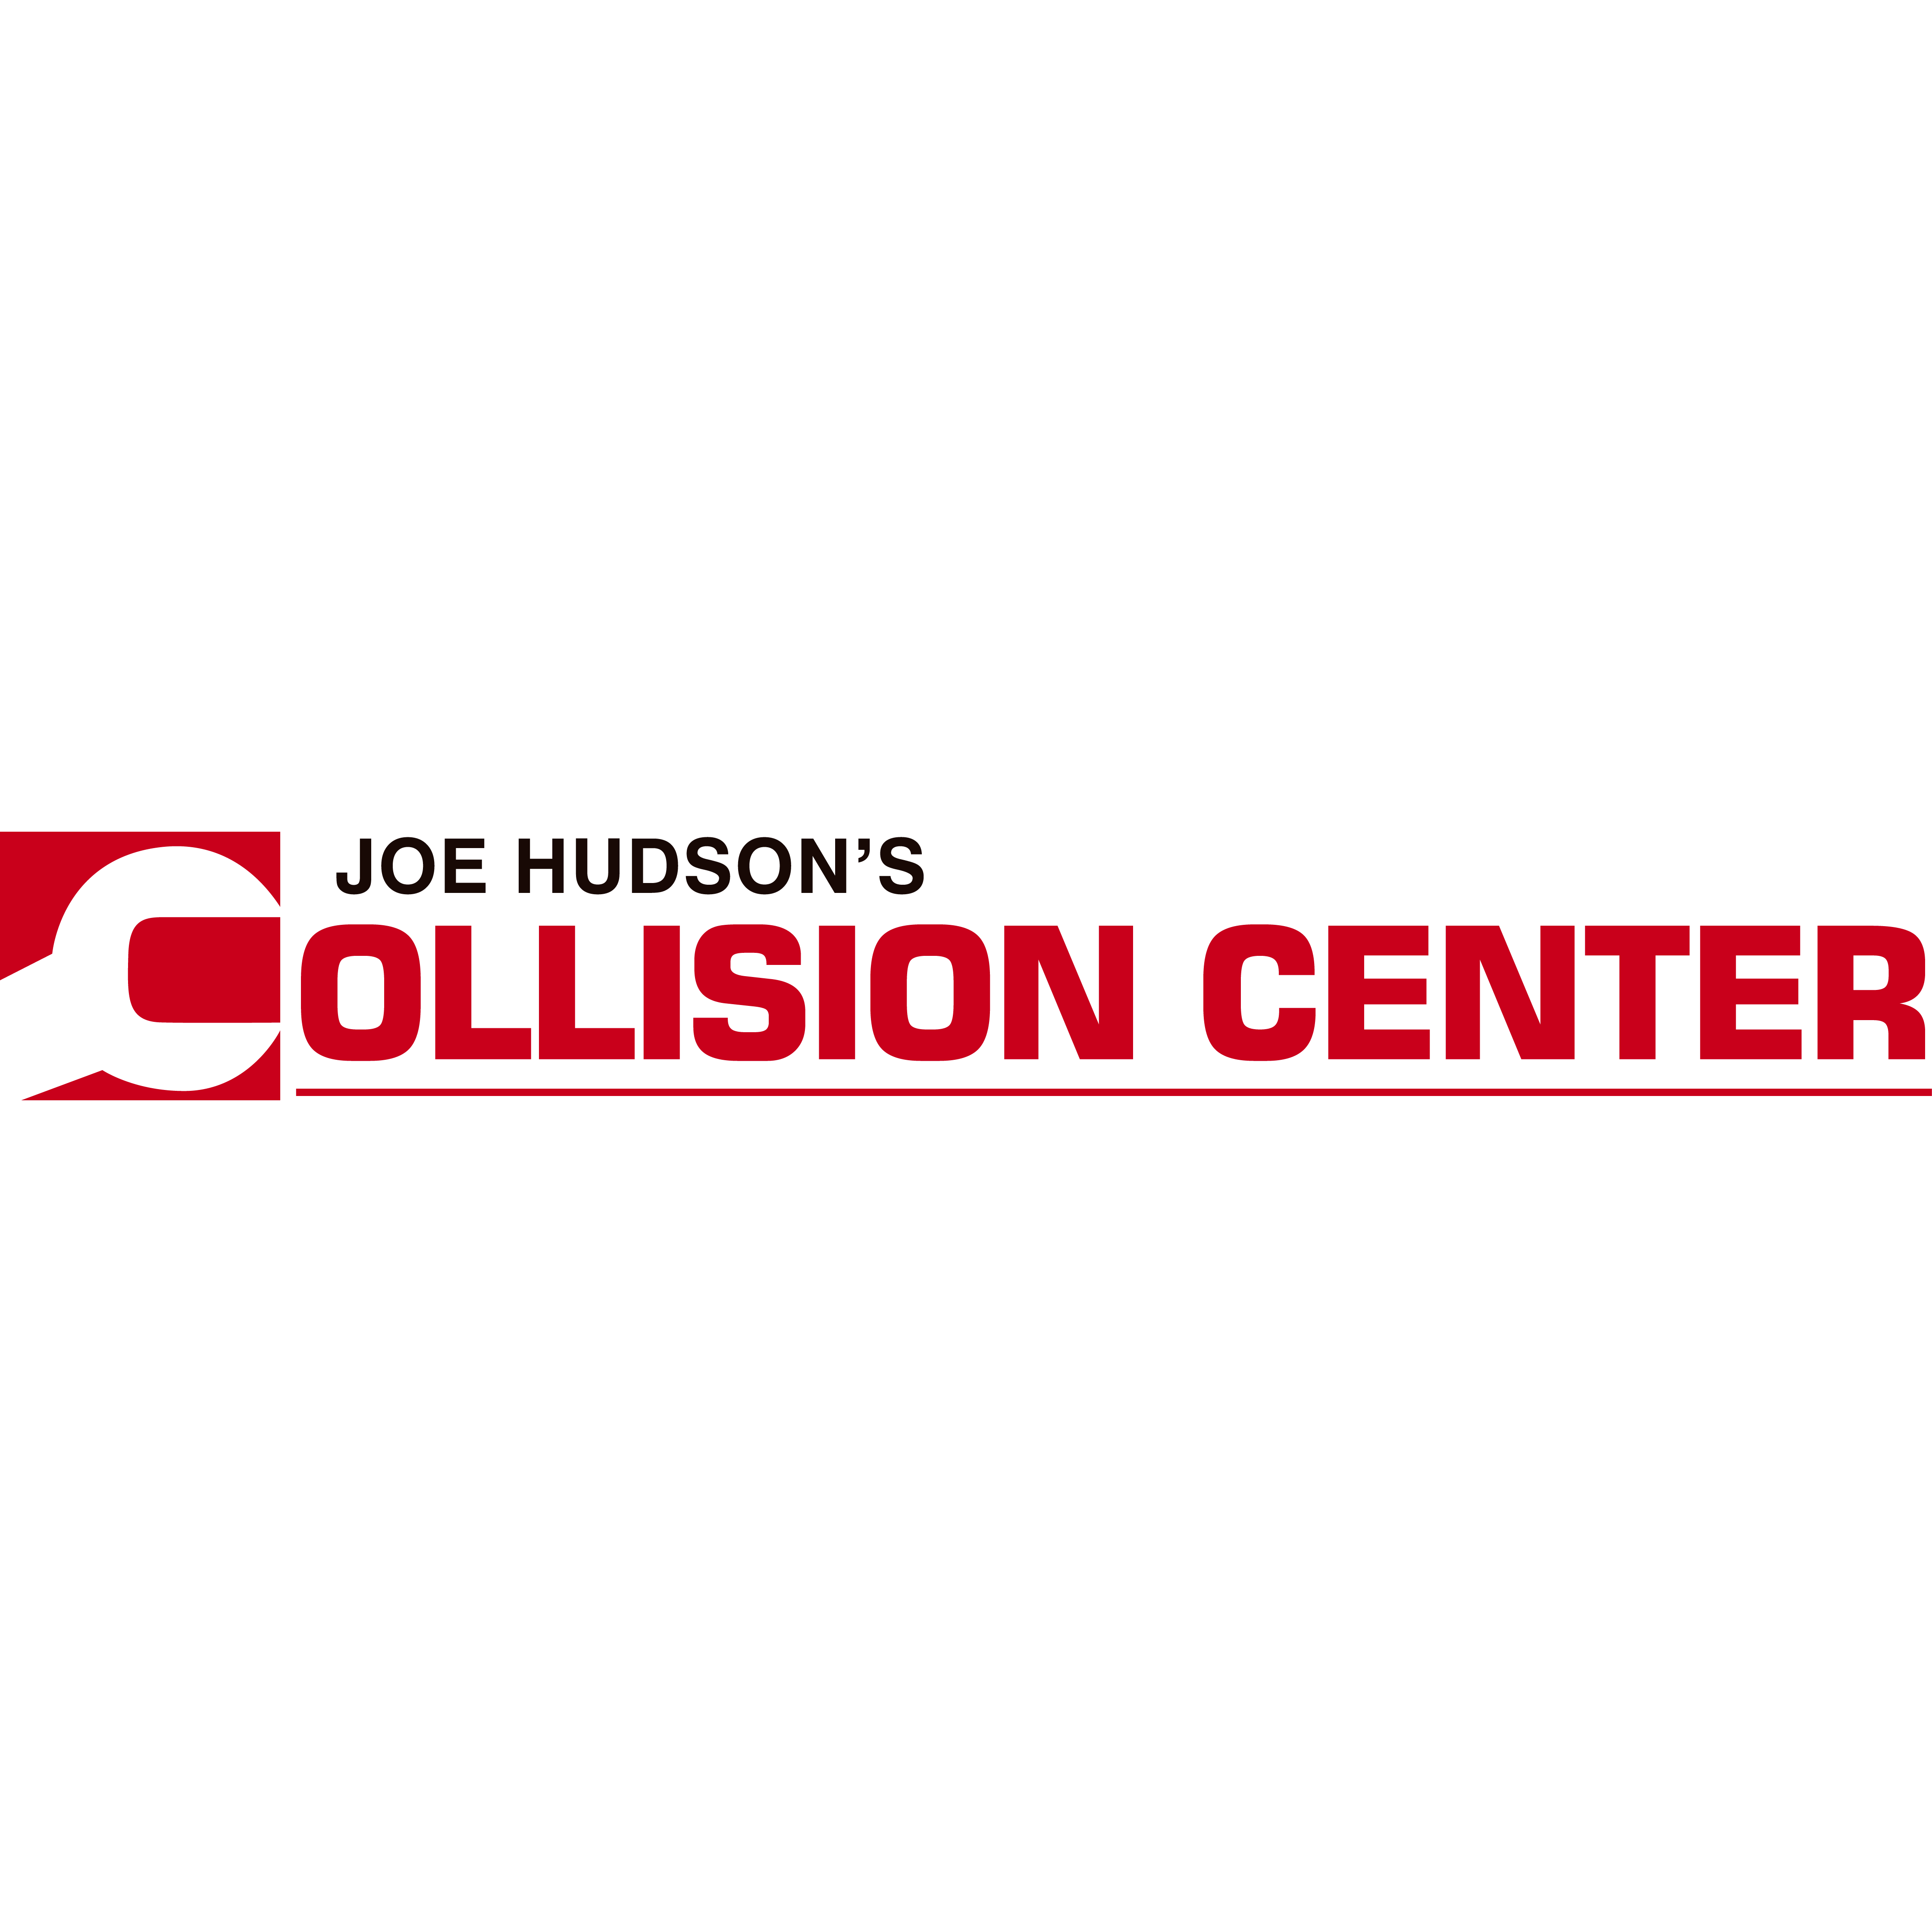 Joe Hudson's Collision Center - Cleveland, TN 37311 - (423)339-1258 | ShowMeLocal.com